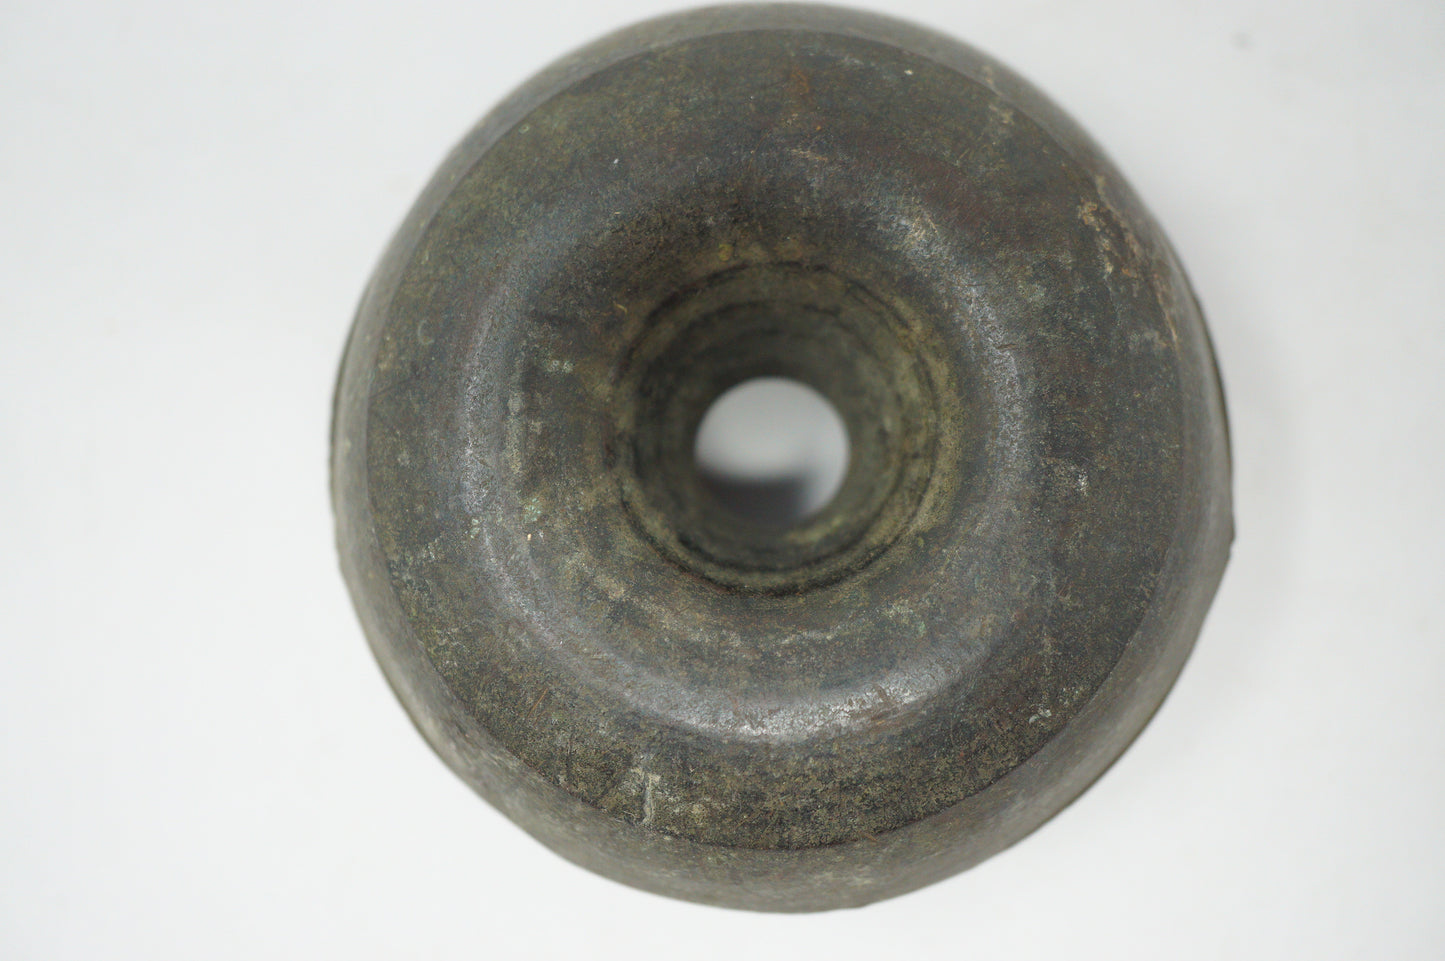 Japanische Pferdeglocke aus dem 19. Jahrhundert, antike Original-Geschirrglocke aus Japan 0410E4